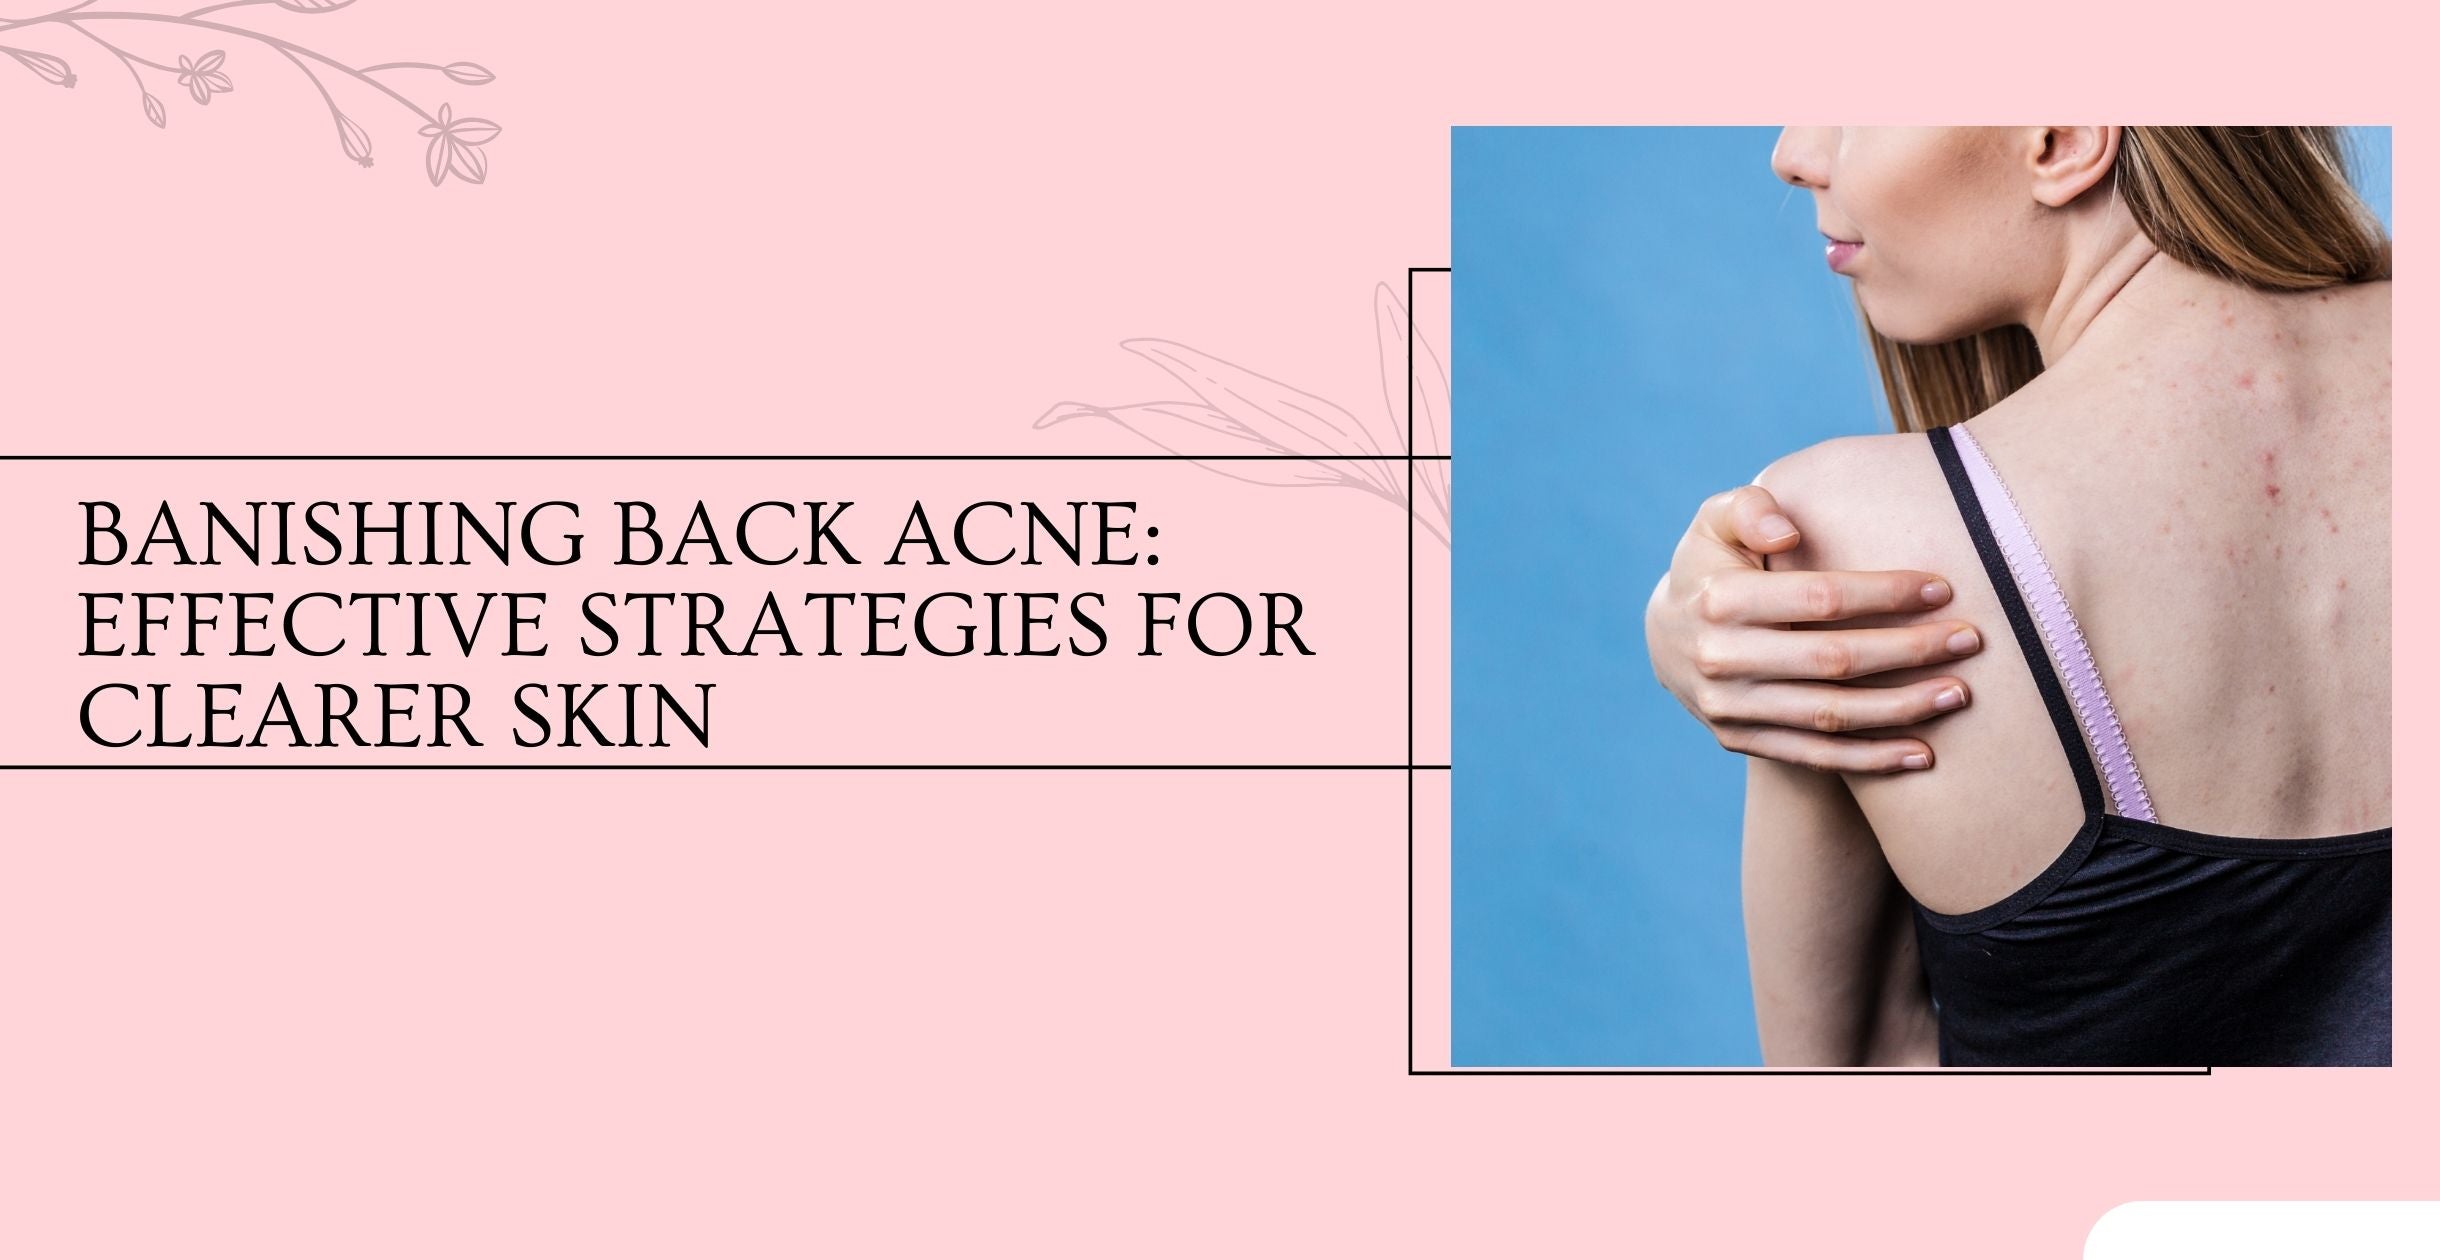 Banishing Back Acne: Effective Strategies for Clearer Skin